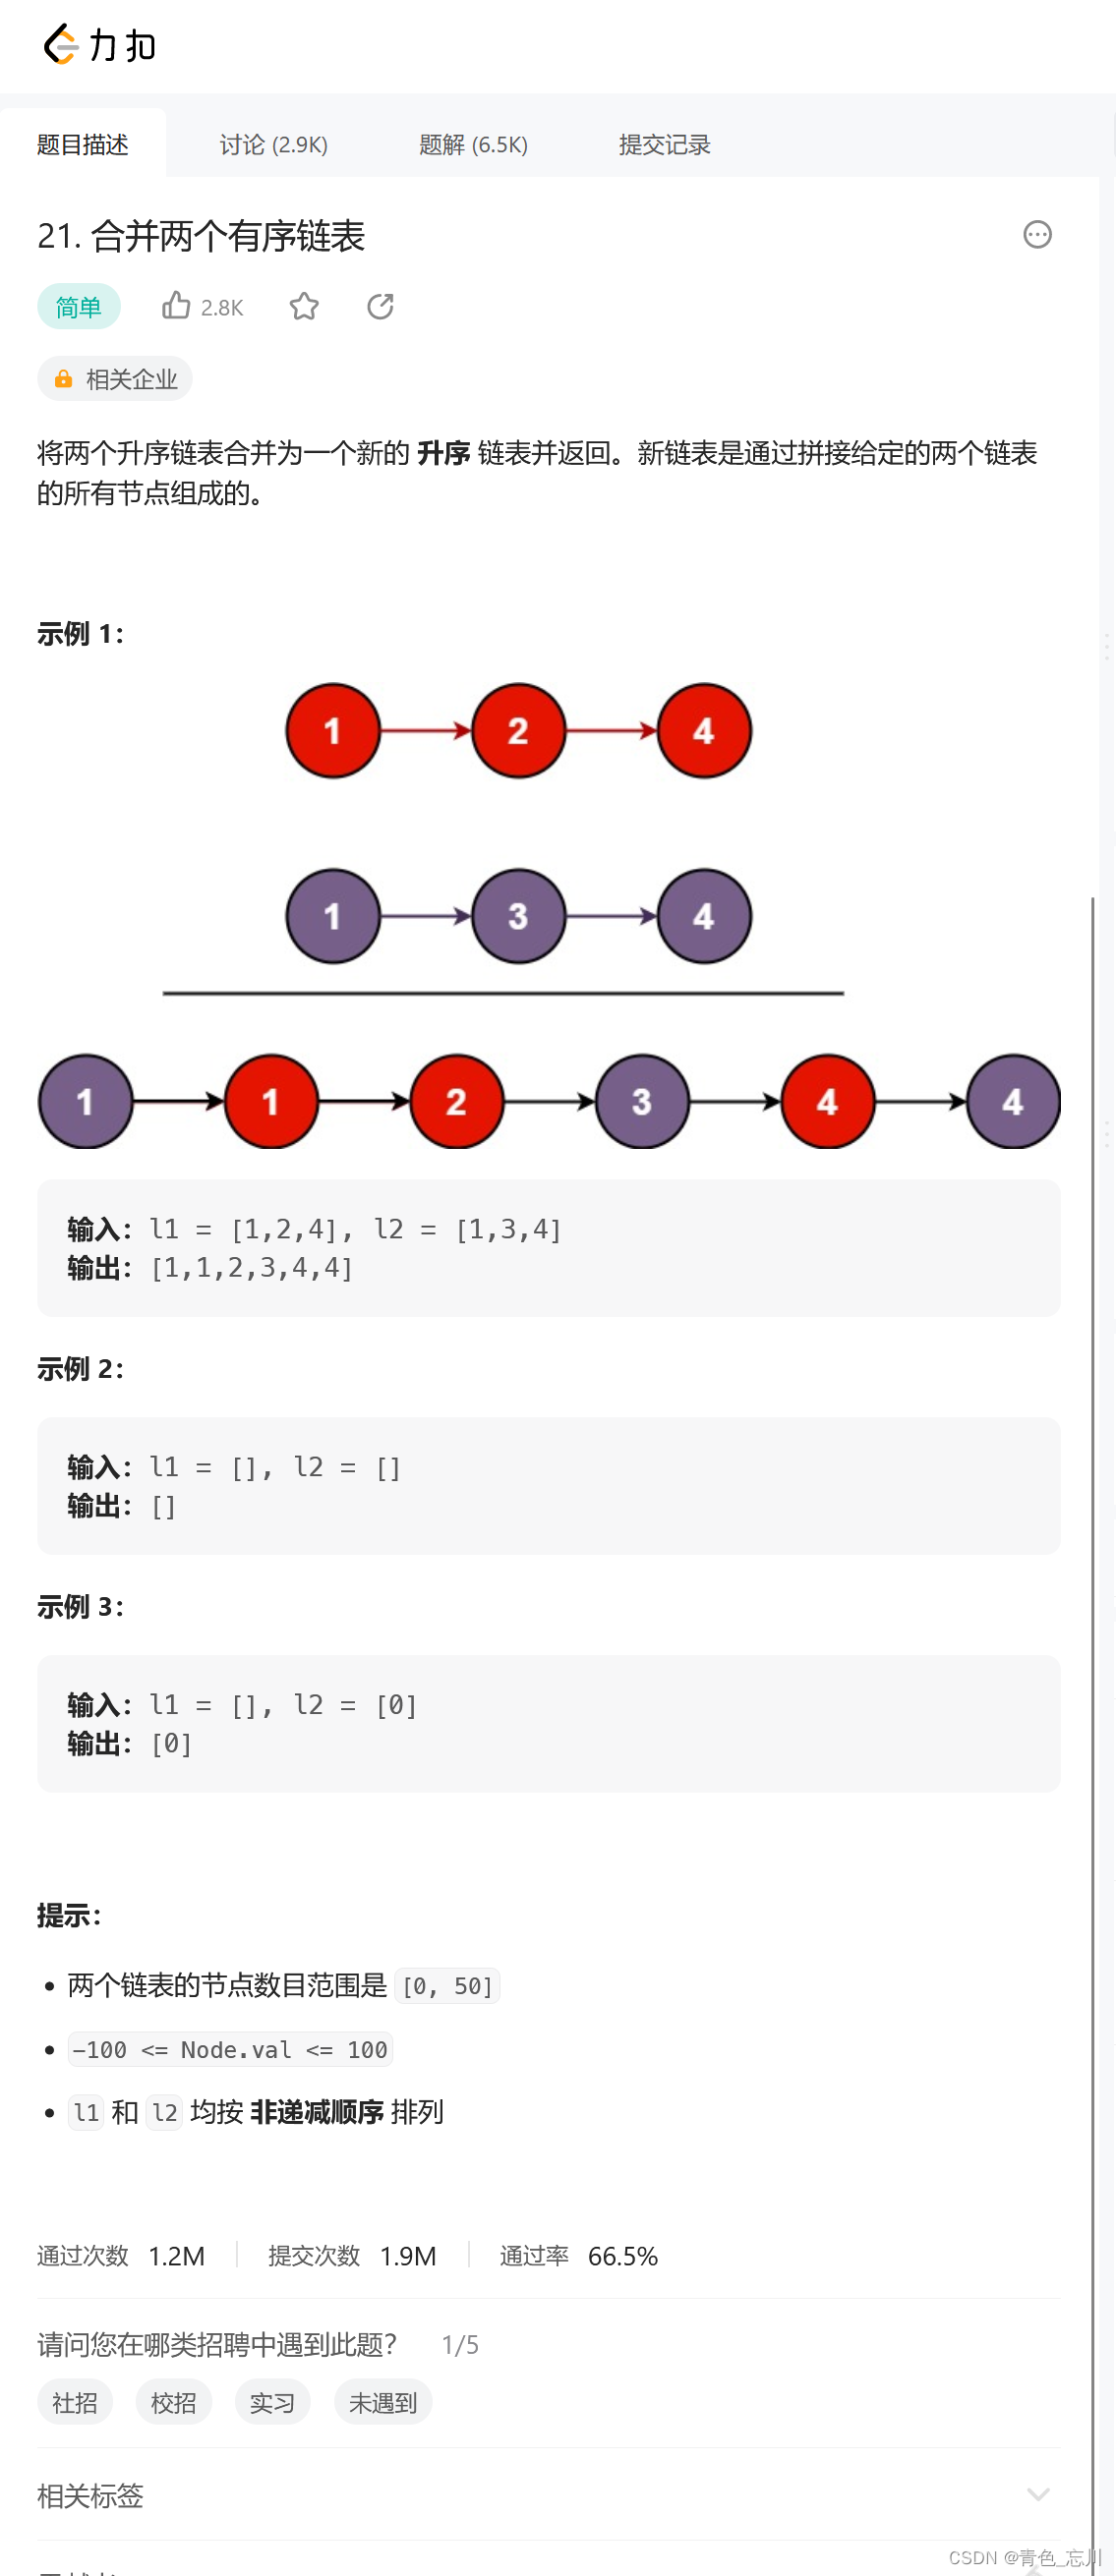 【LeetCode题目详解】（三）21.合并两个有序链表、141.环形链表、142.环形链表Ⅱ